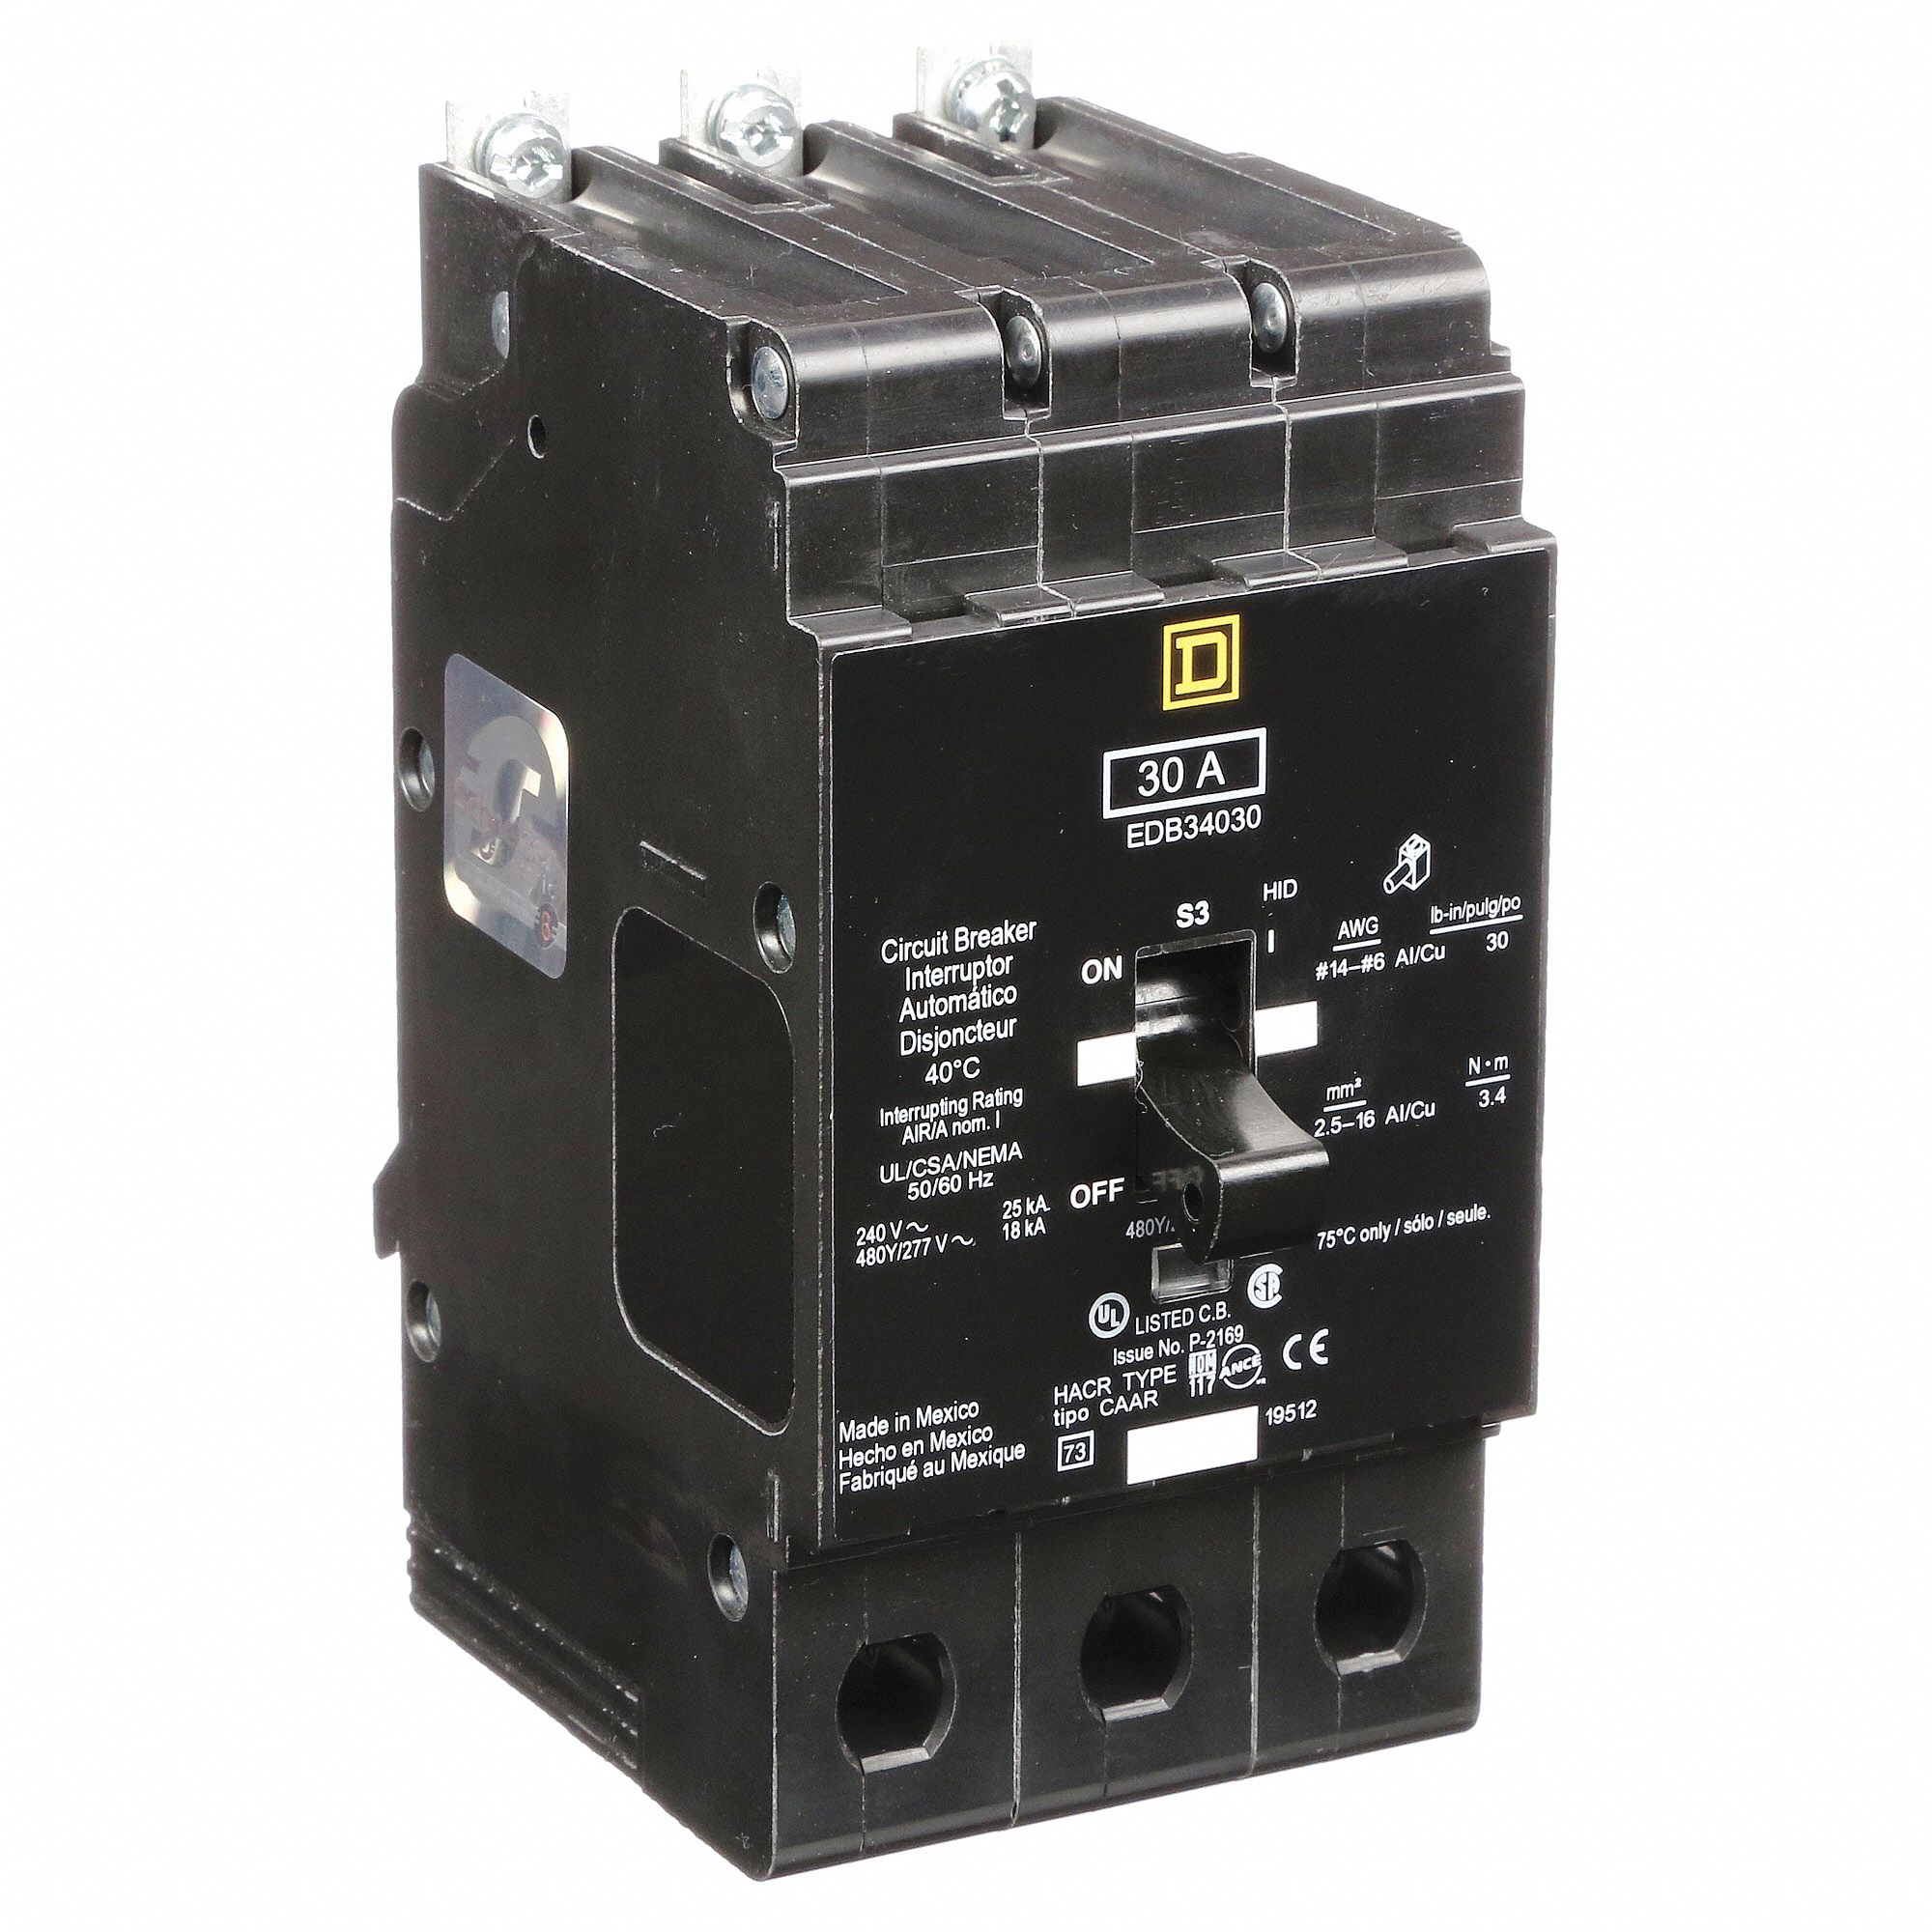 SQUARE D, 30 A, 277/480V AC, Miniature Circuit Breaker - 3TW40